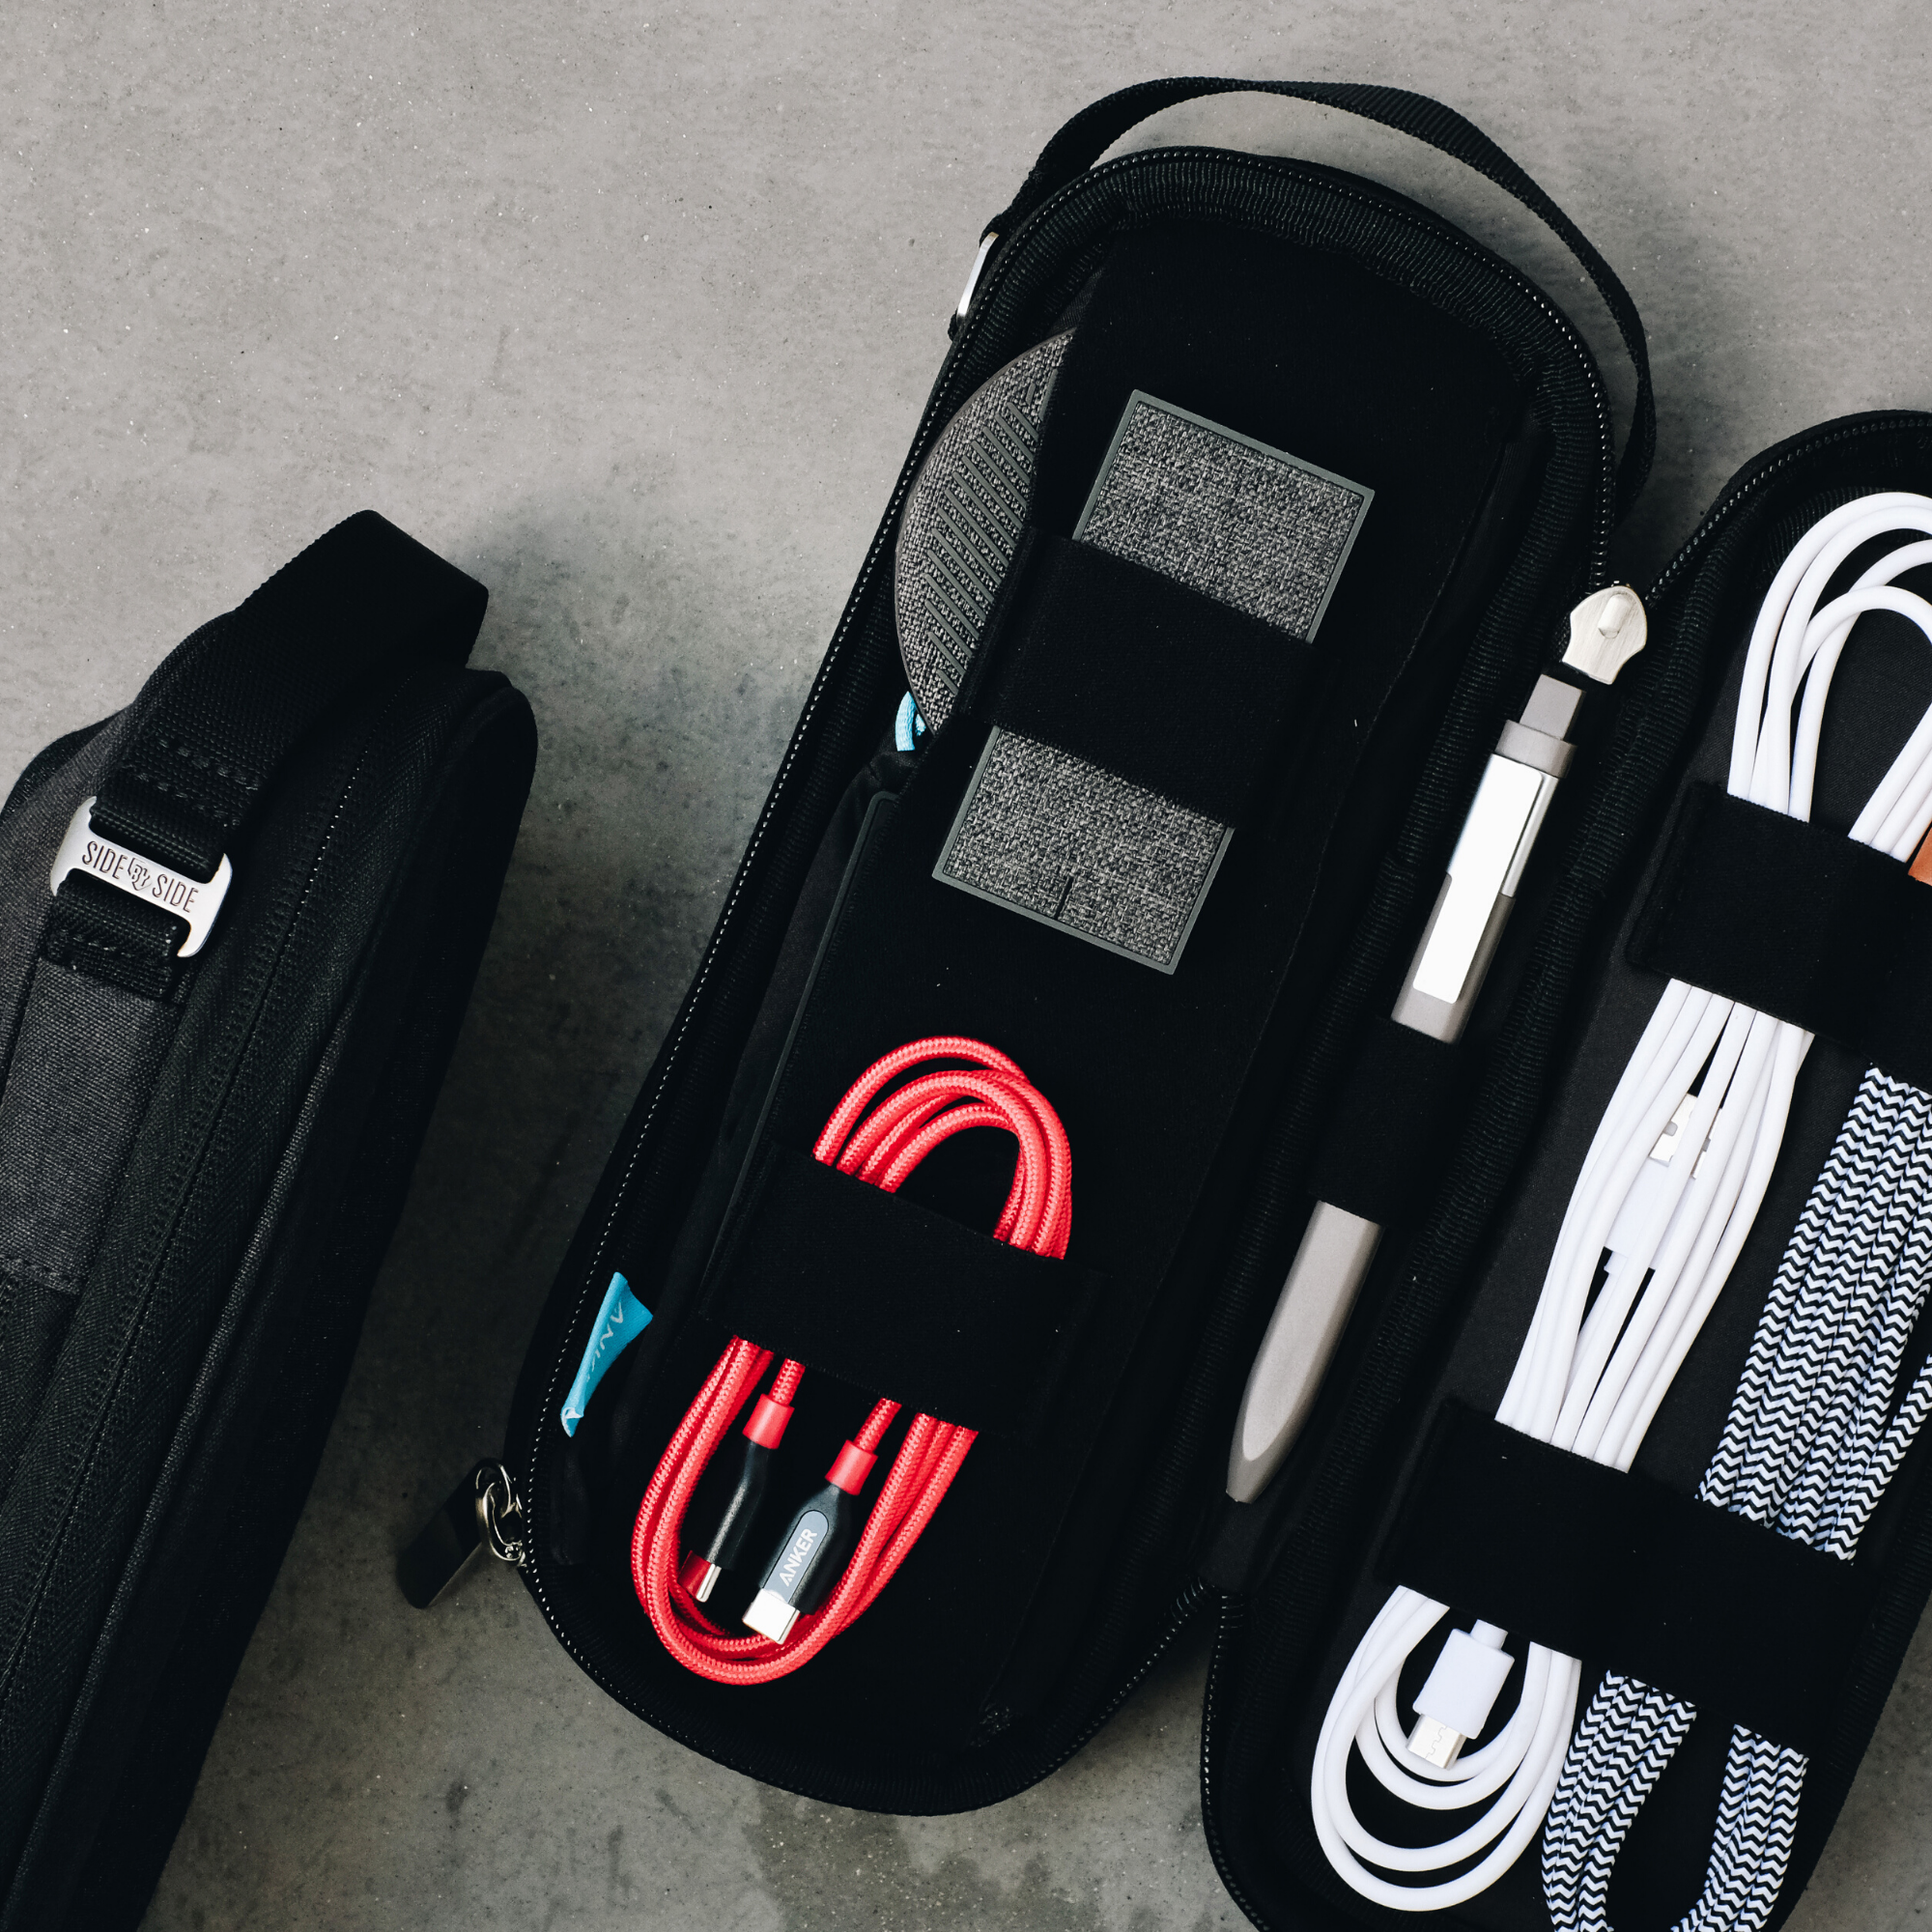 Side by Side Power Packer Tech Accessory Organizer Bag - Travel Gear Case - Shadow